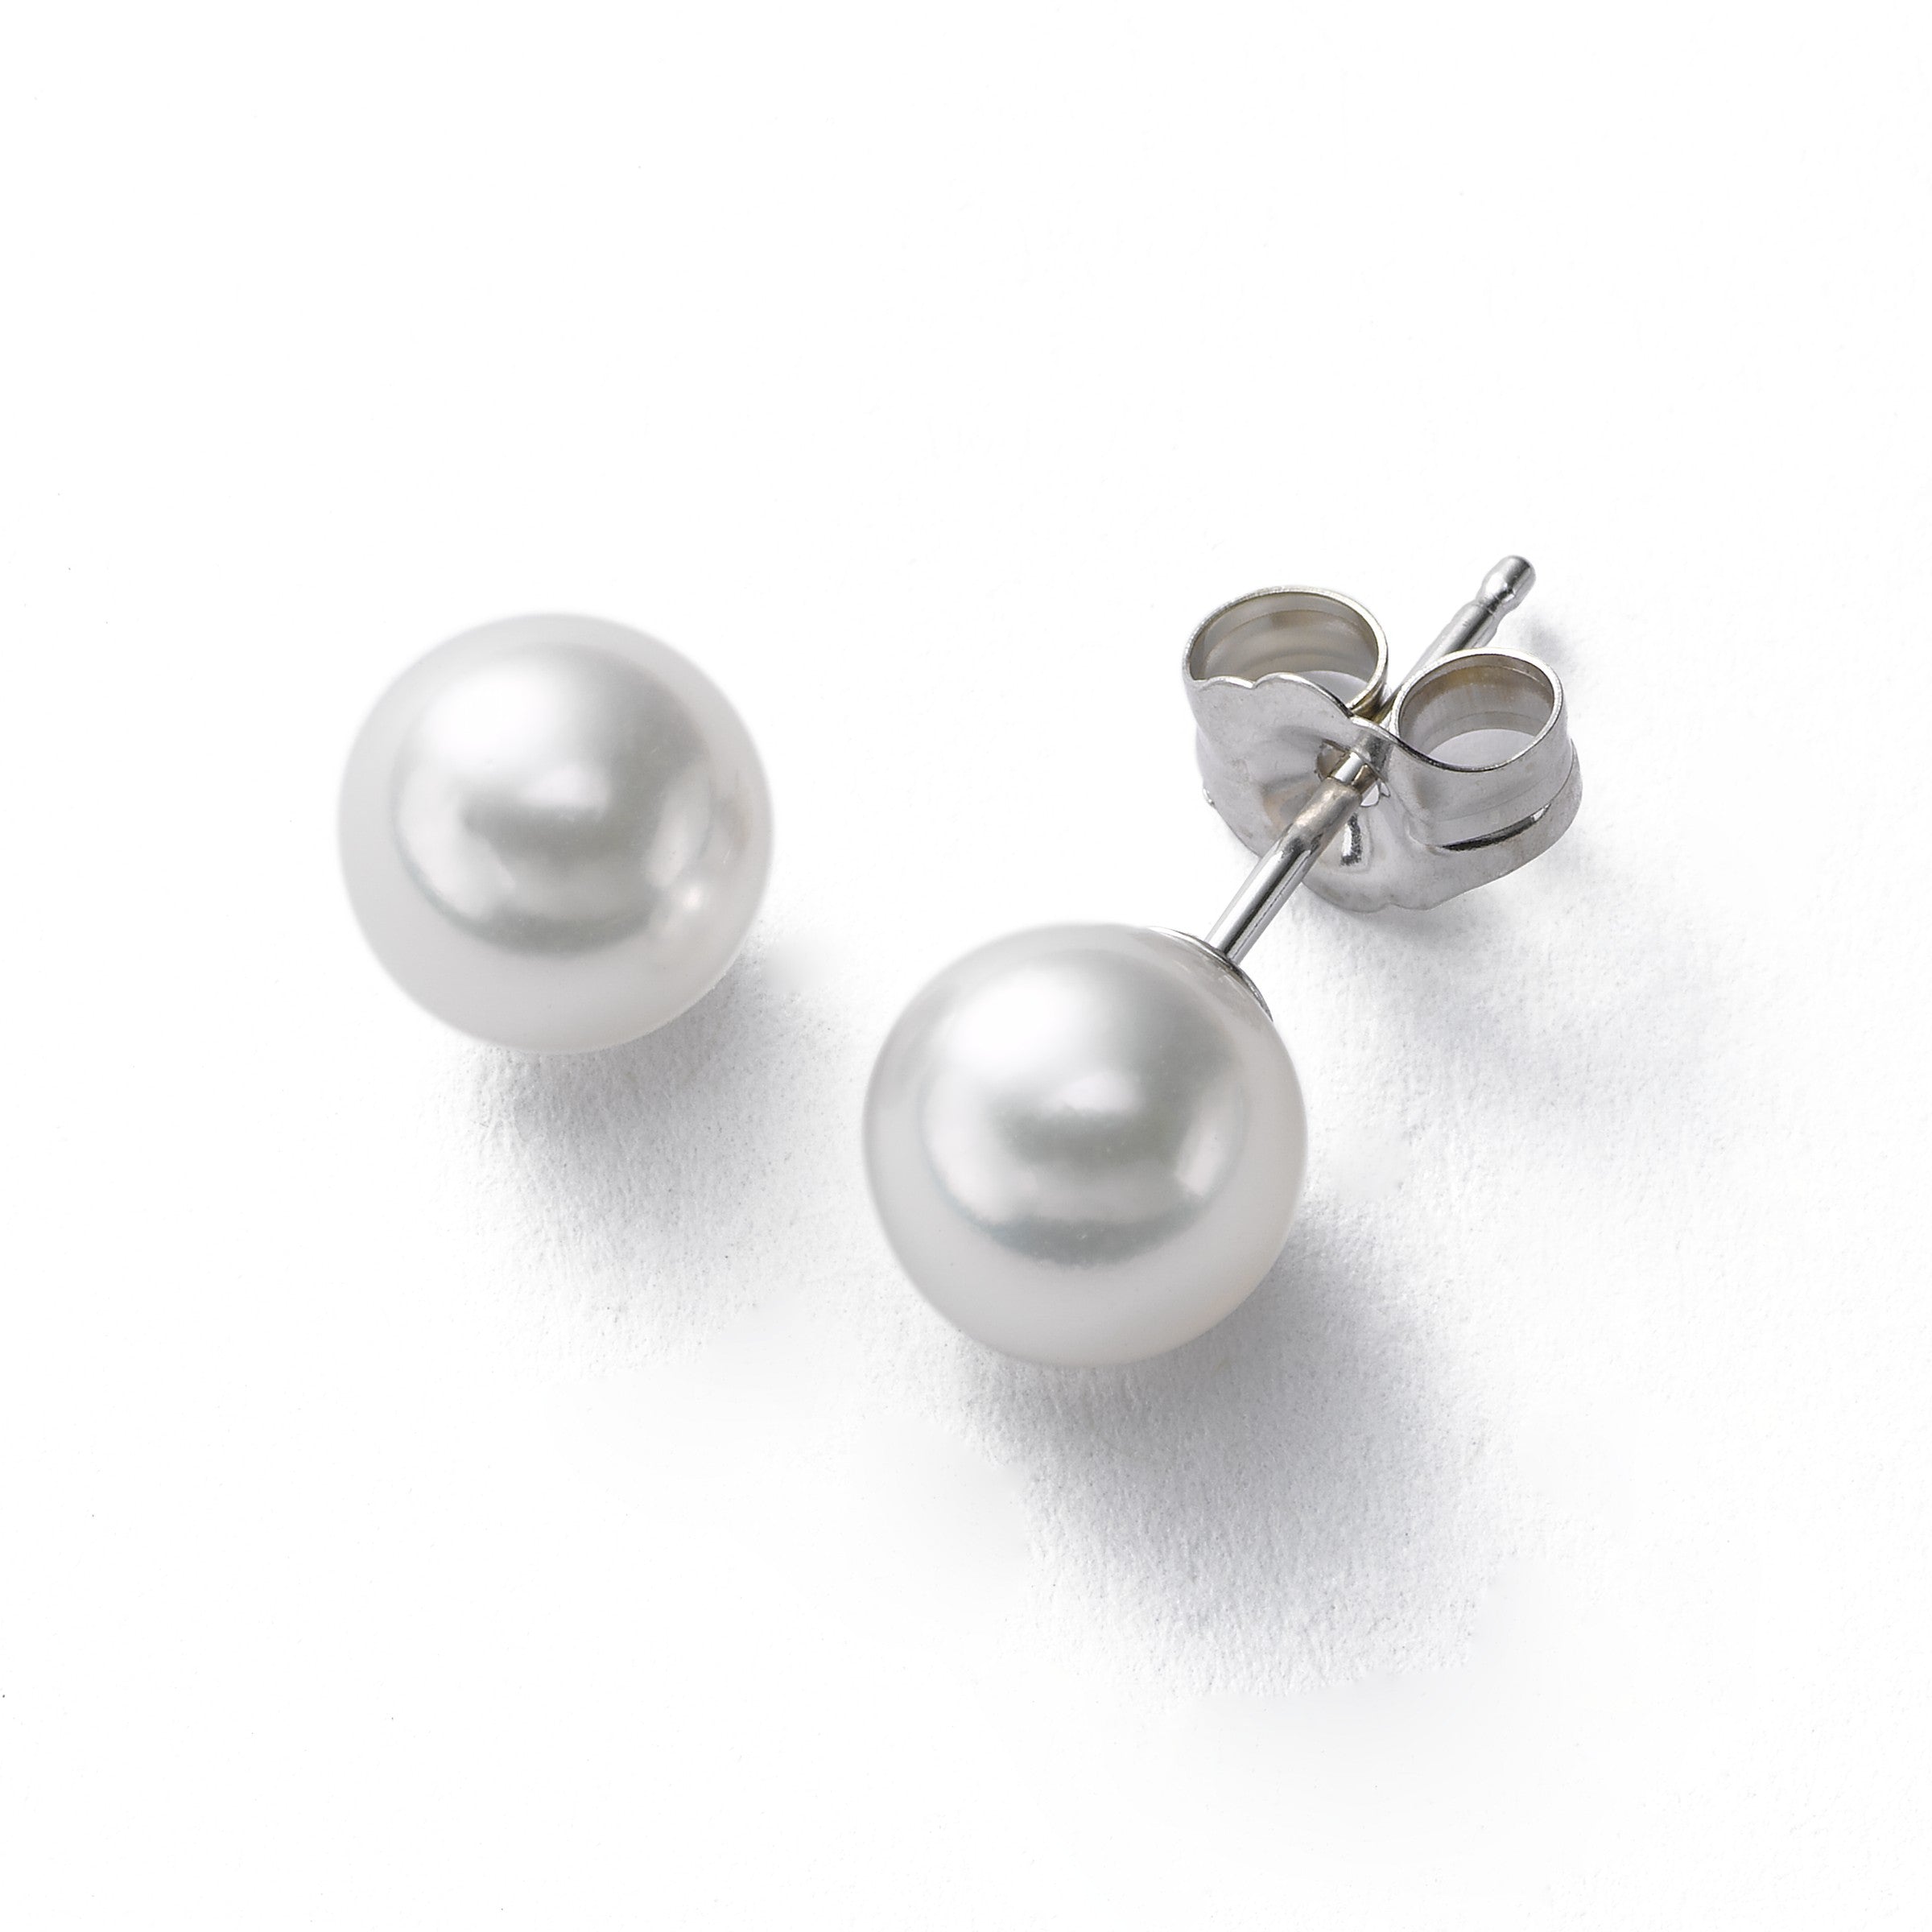 Shop the Mikimoto Earring PES 701 W | Adlers Jewelers